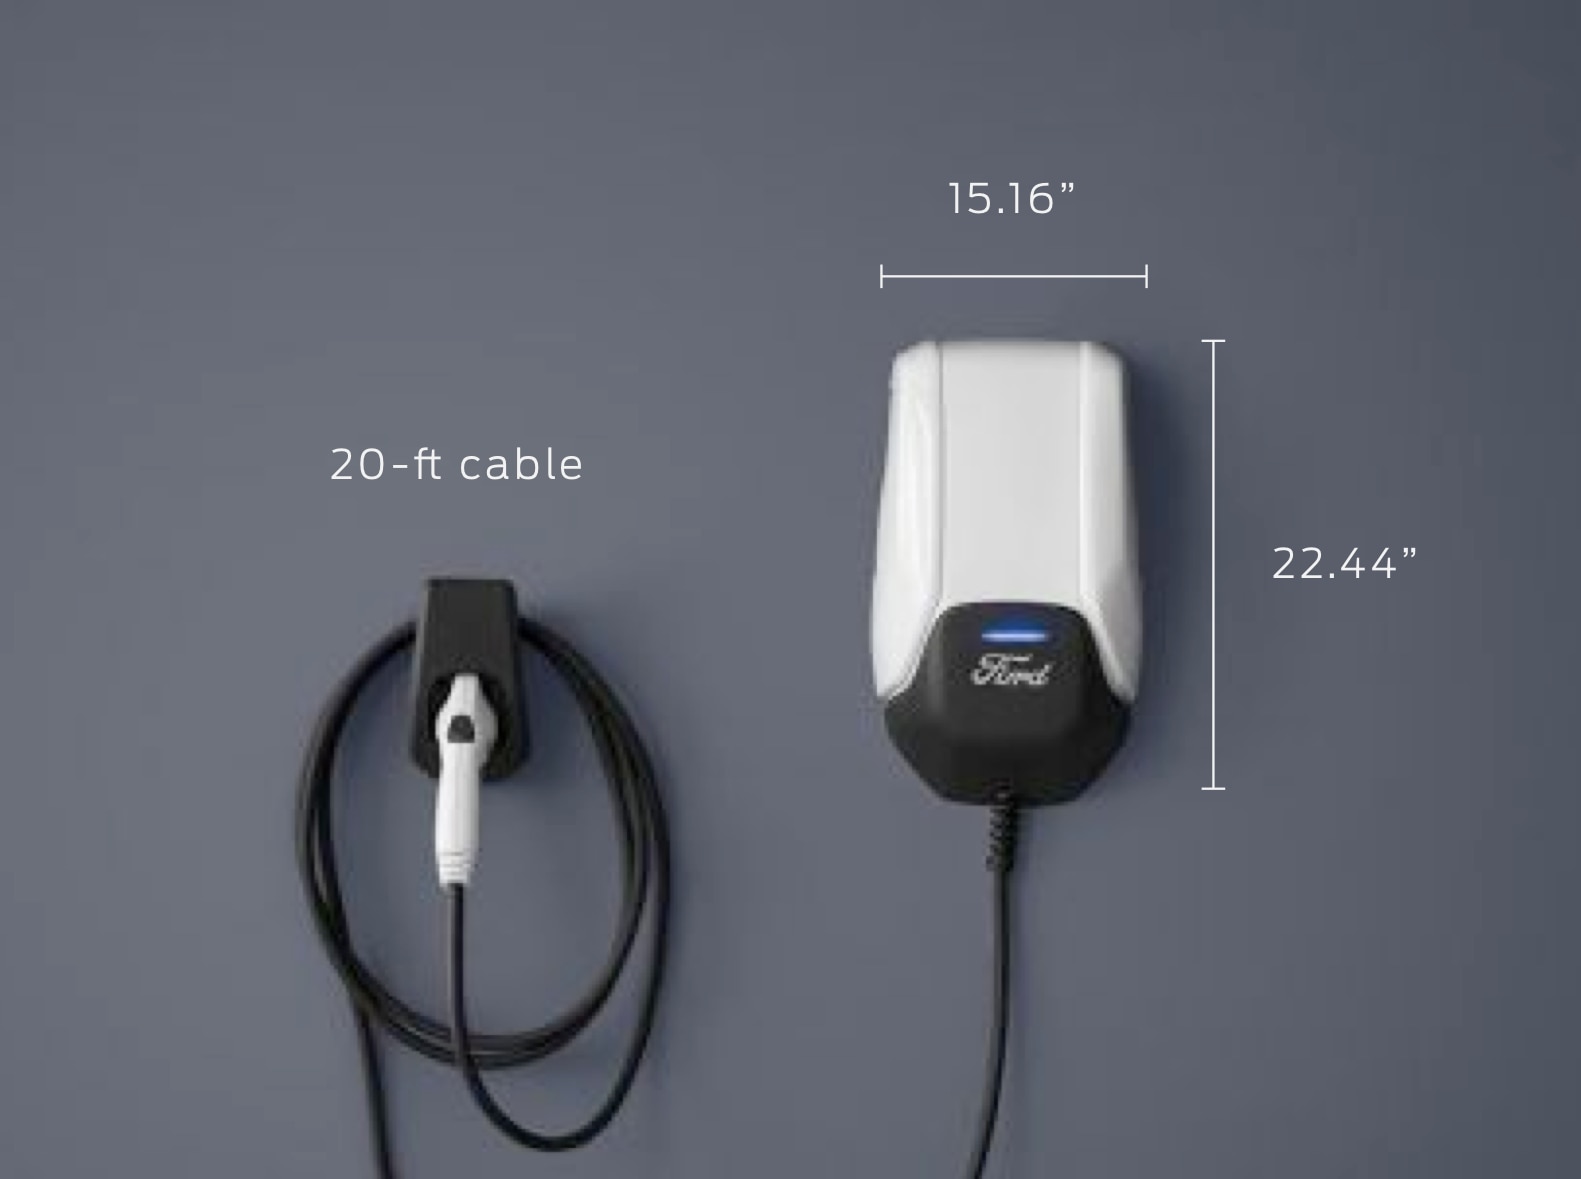 Webasto Go EV Charger - Dual Voltage Portable Cordset 240v 14-50 Charging  Cable